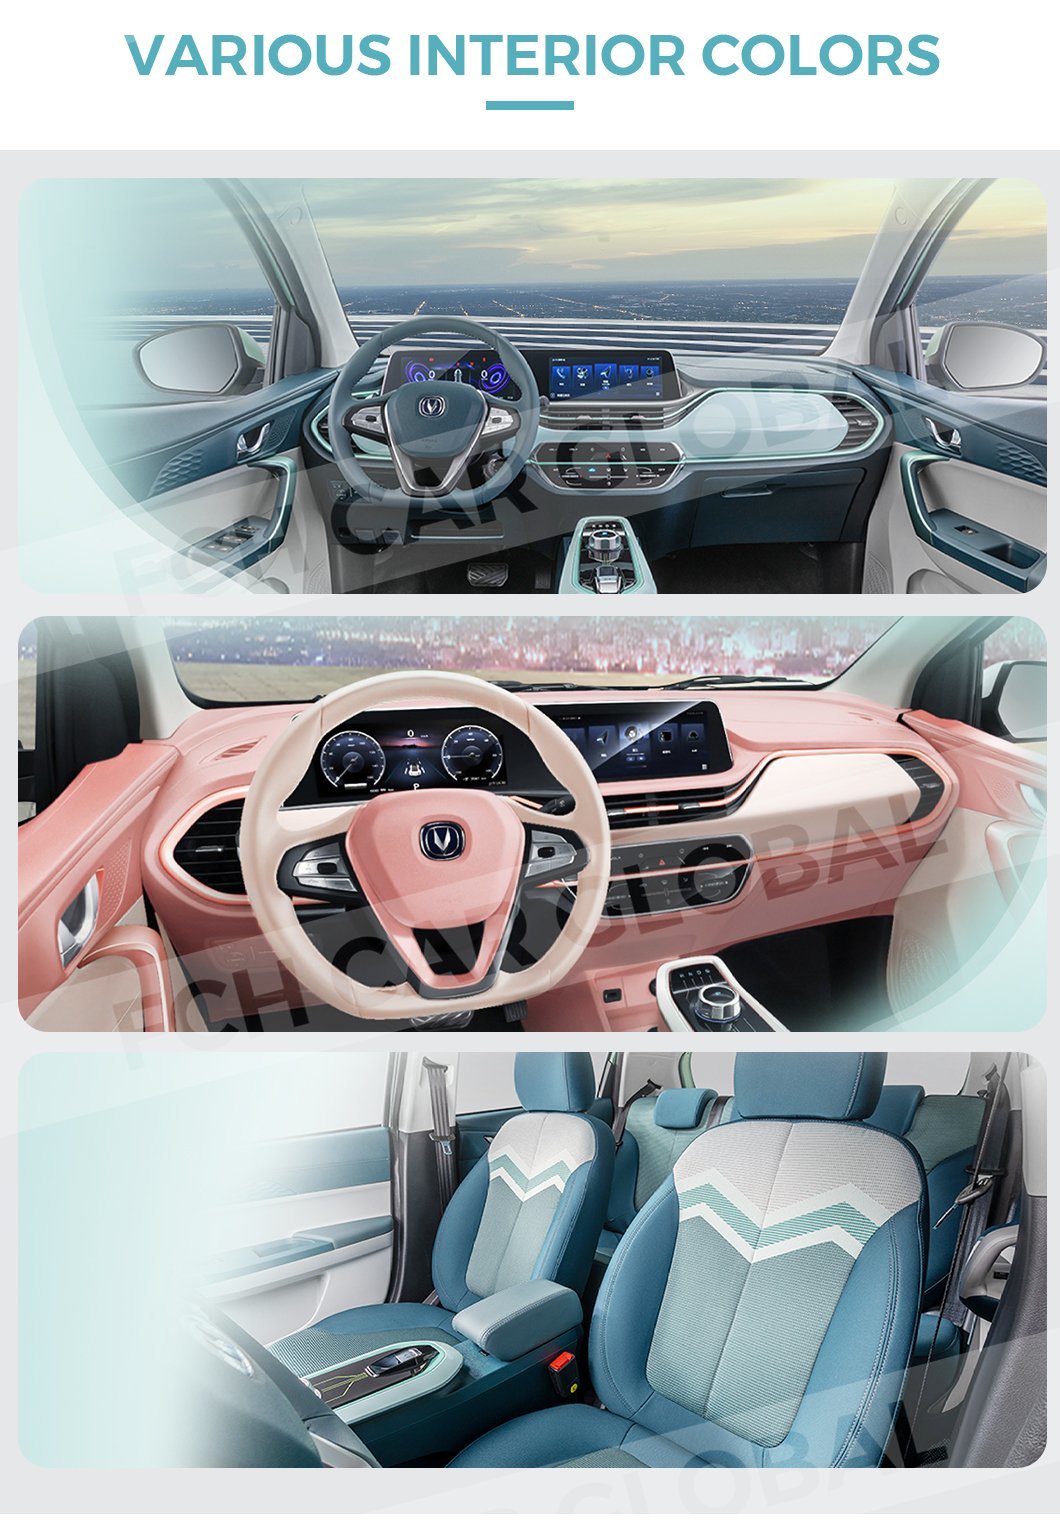 in Stock Changan Benben 2023 E-Star Mini EV Energy Vehicle New Electric Cars